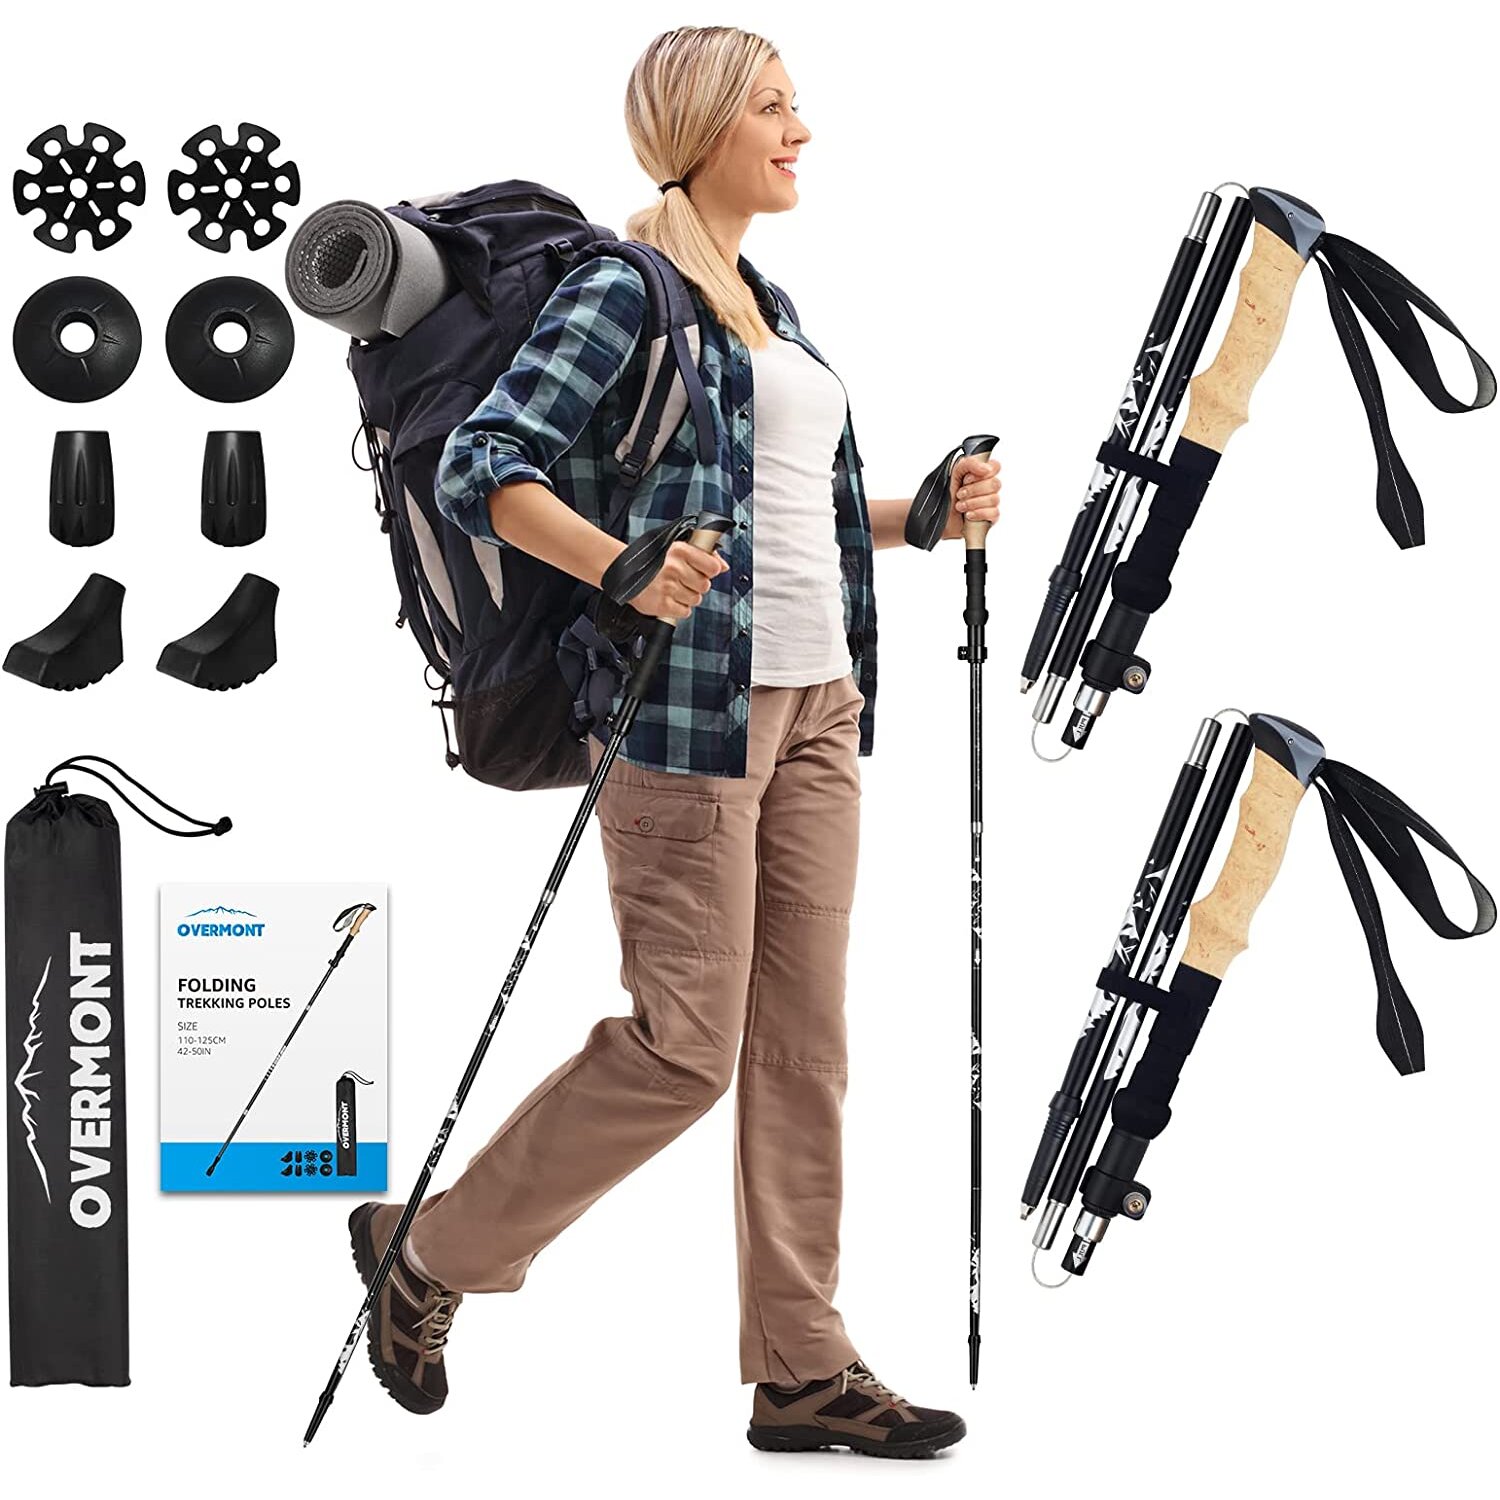 Overmont Walking Poles - 2 Pack Collapsible Aluminum Walking Sticks,Carbon Fiber Adjustable Trekking Poles,for Women Men with Quick Lock System